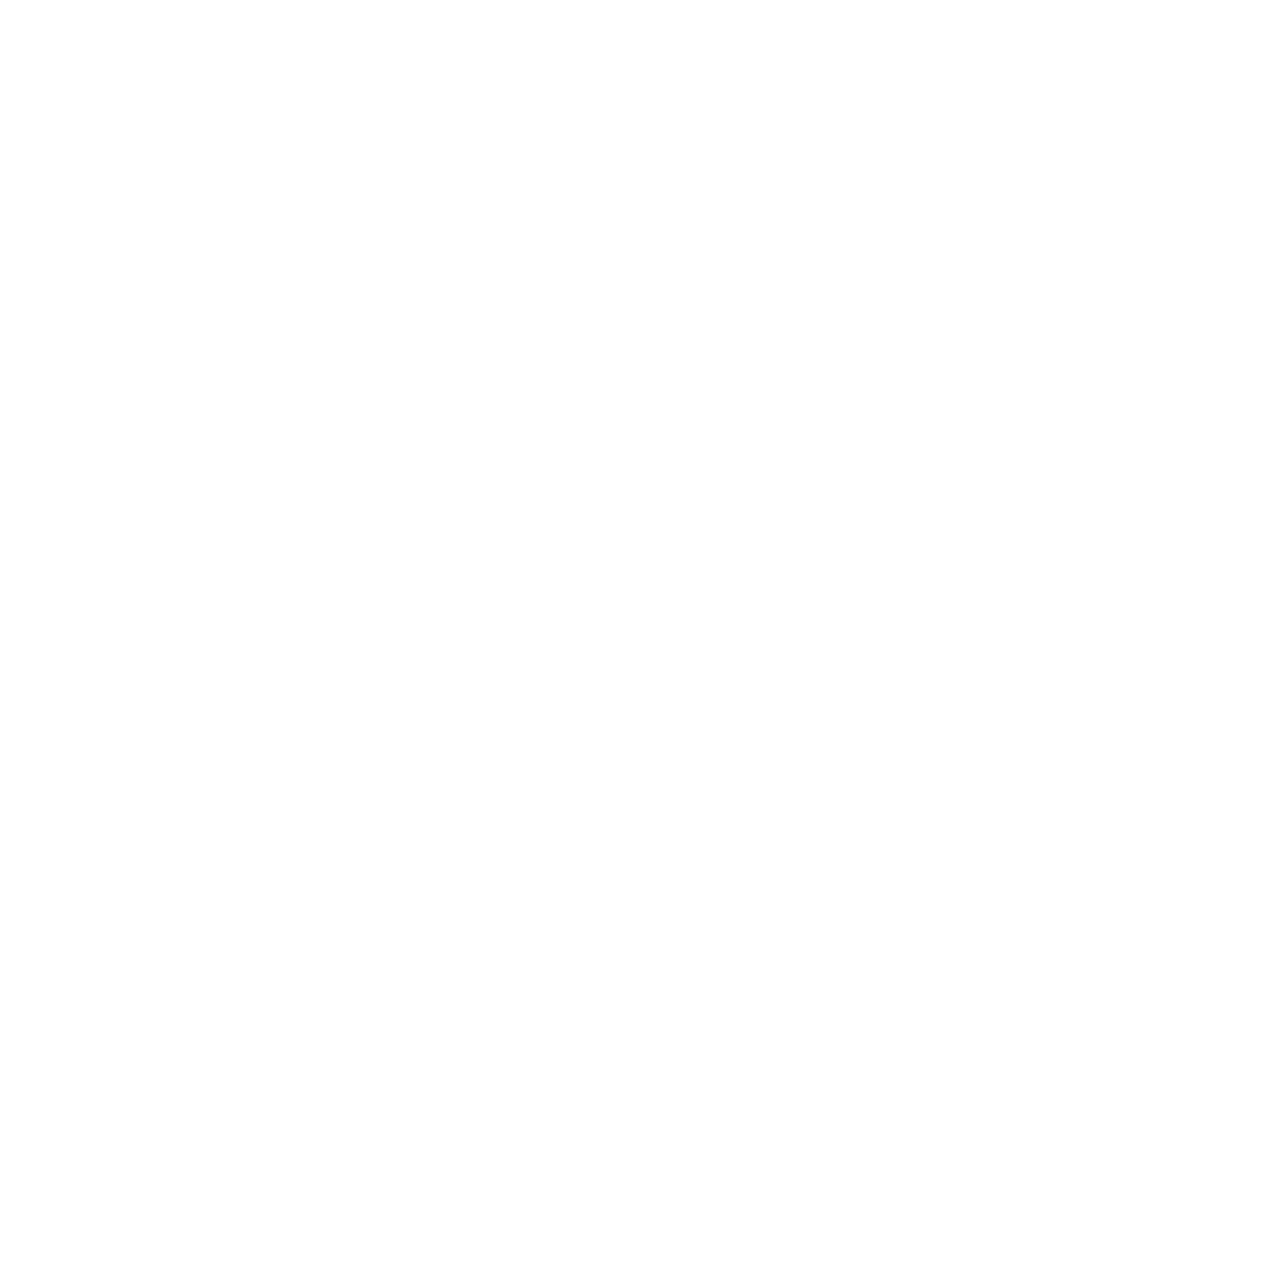 Hope Animal Clinic